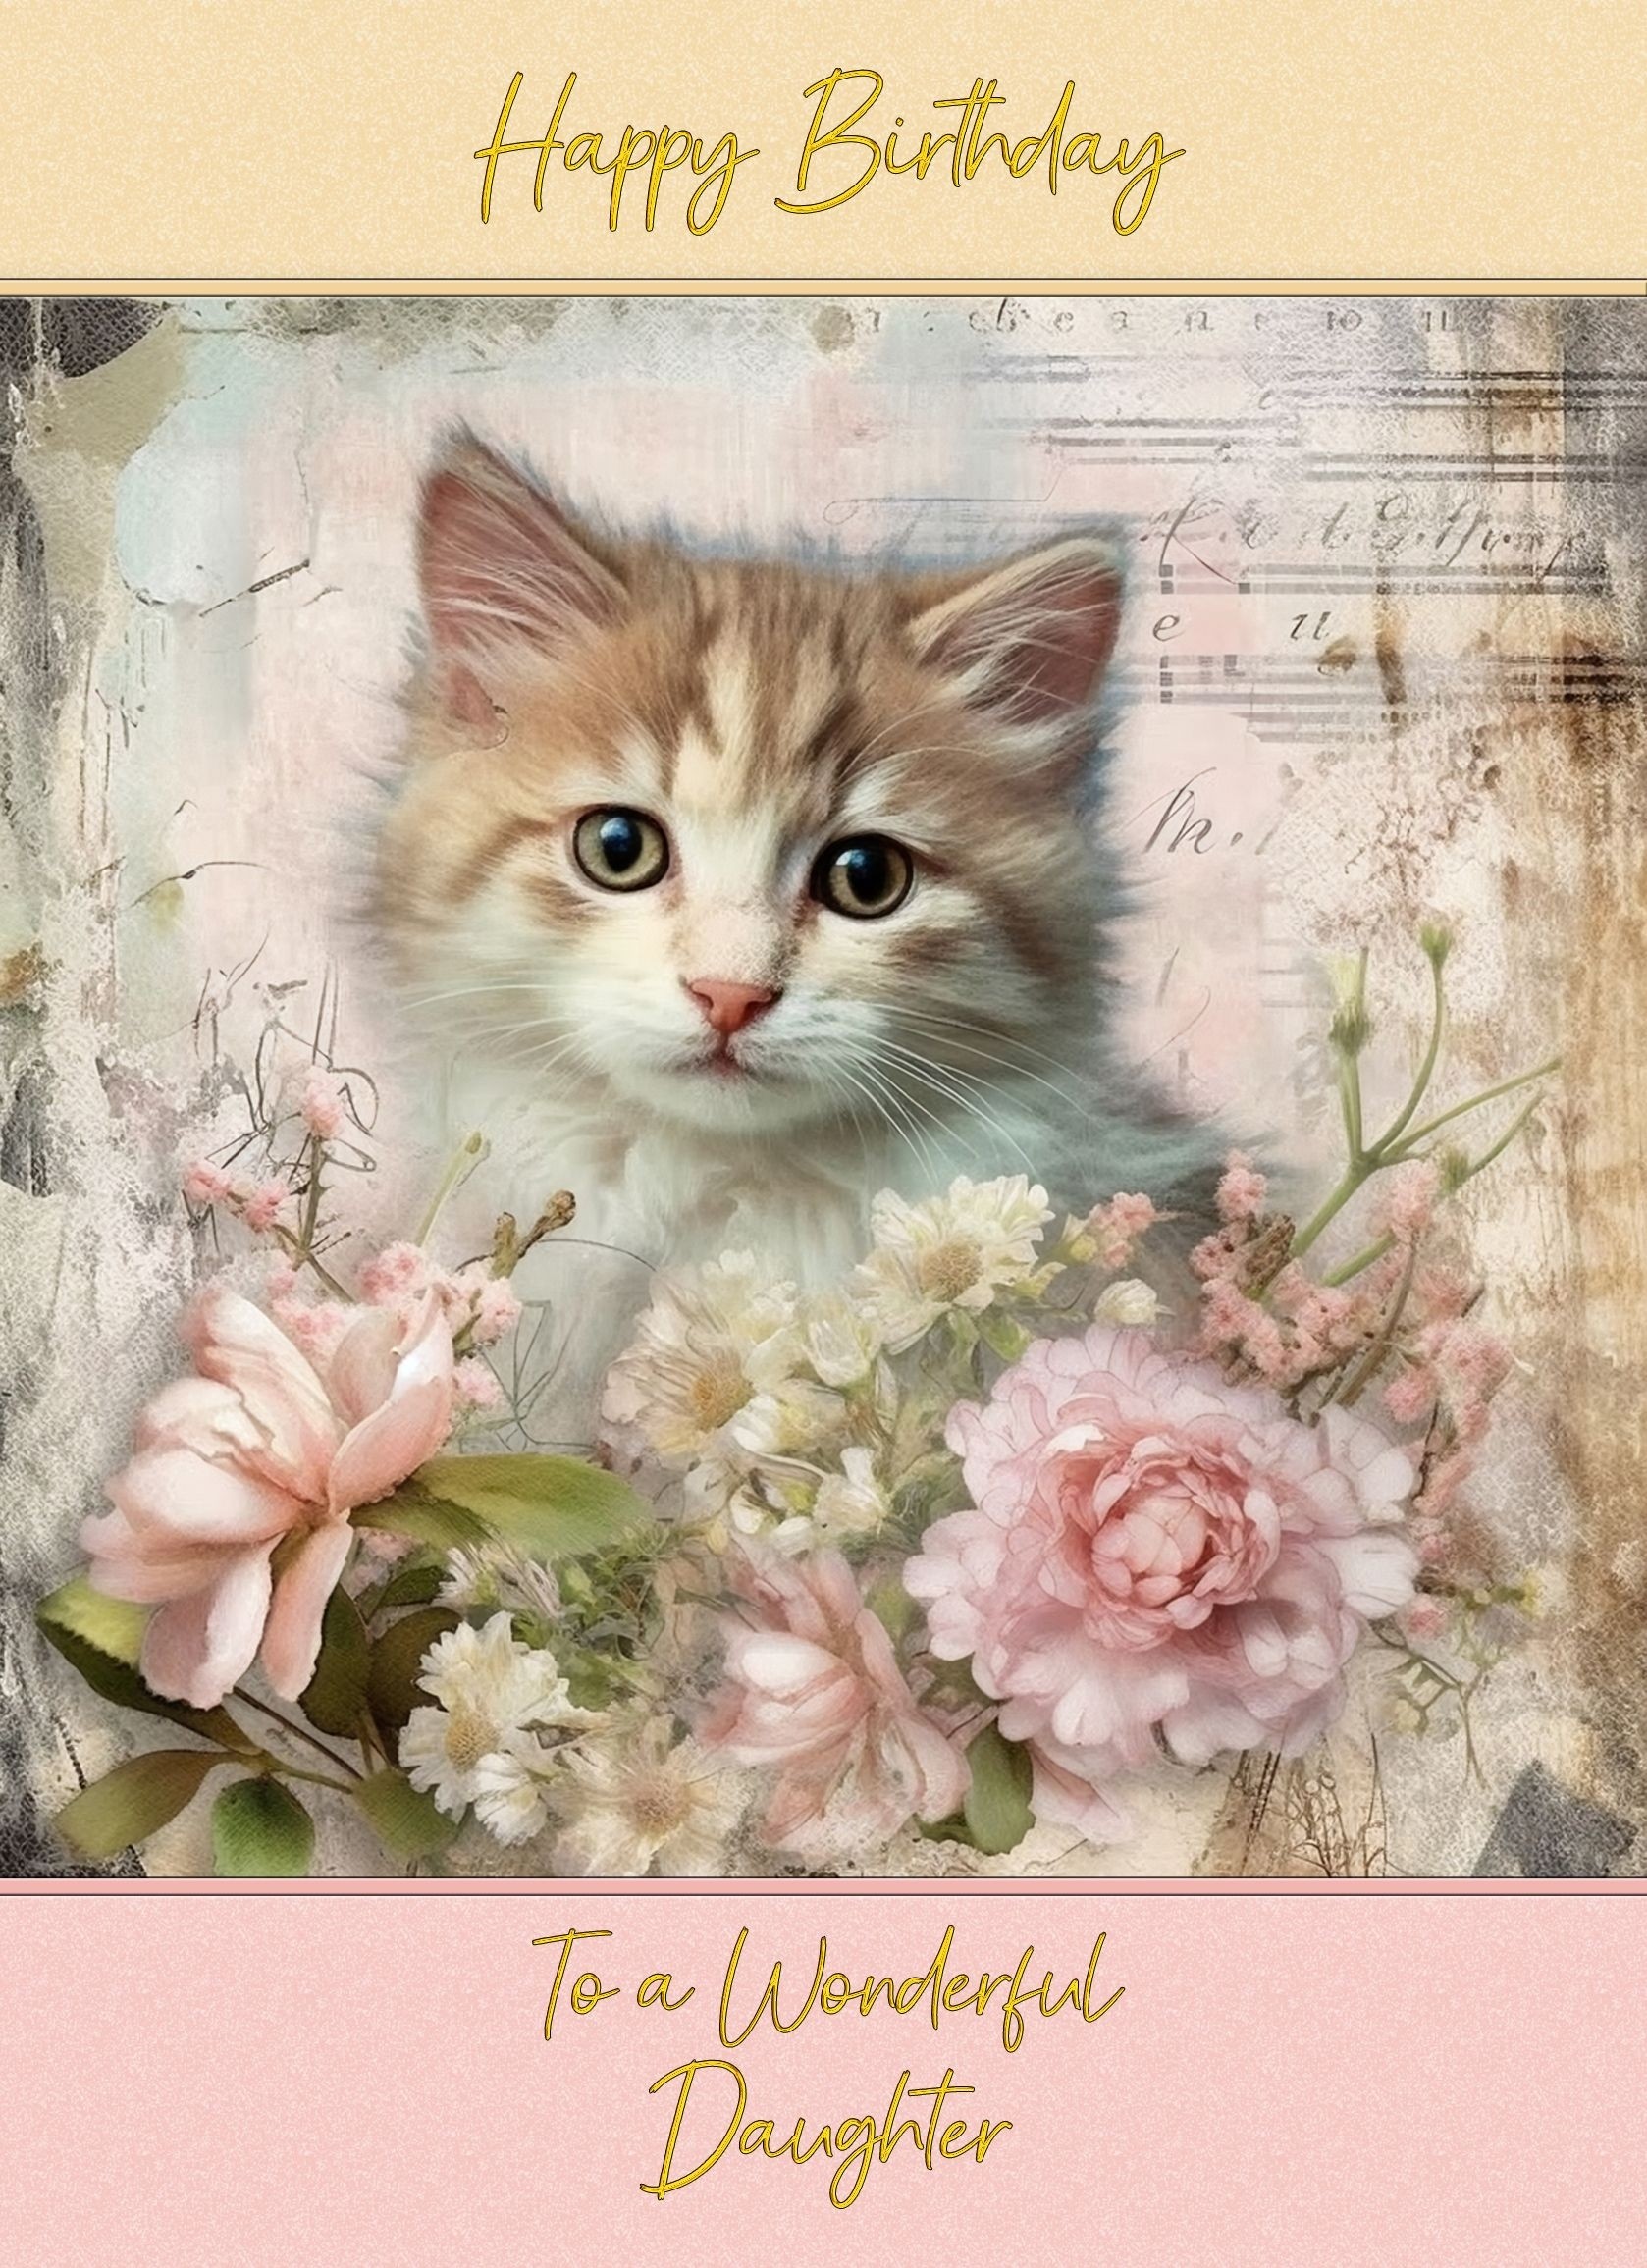 Cat Art Birthday Card for Daughter (Design 3)